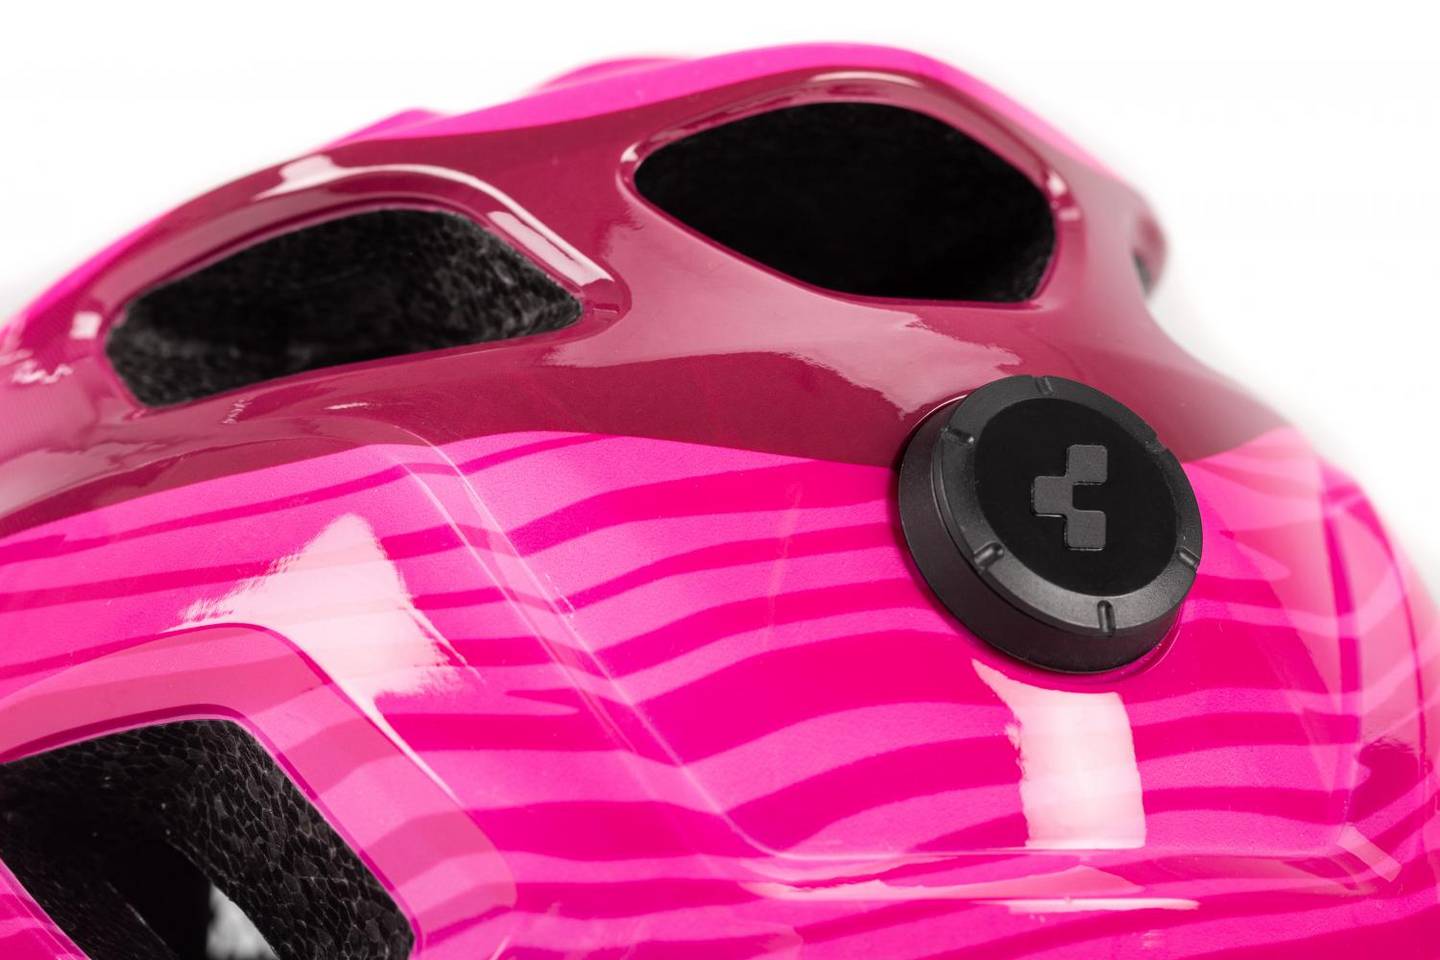 CUBE Helm FINK  / pink XS (46-51)